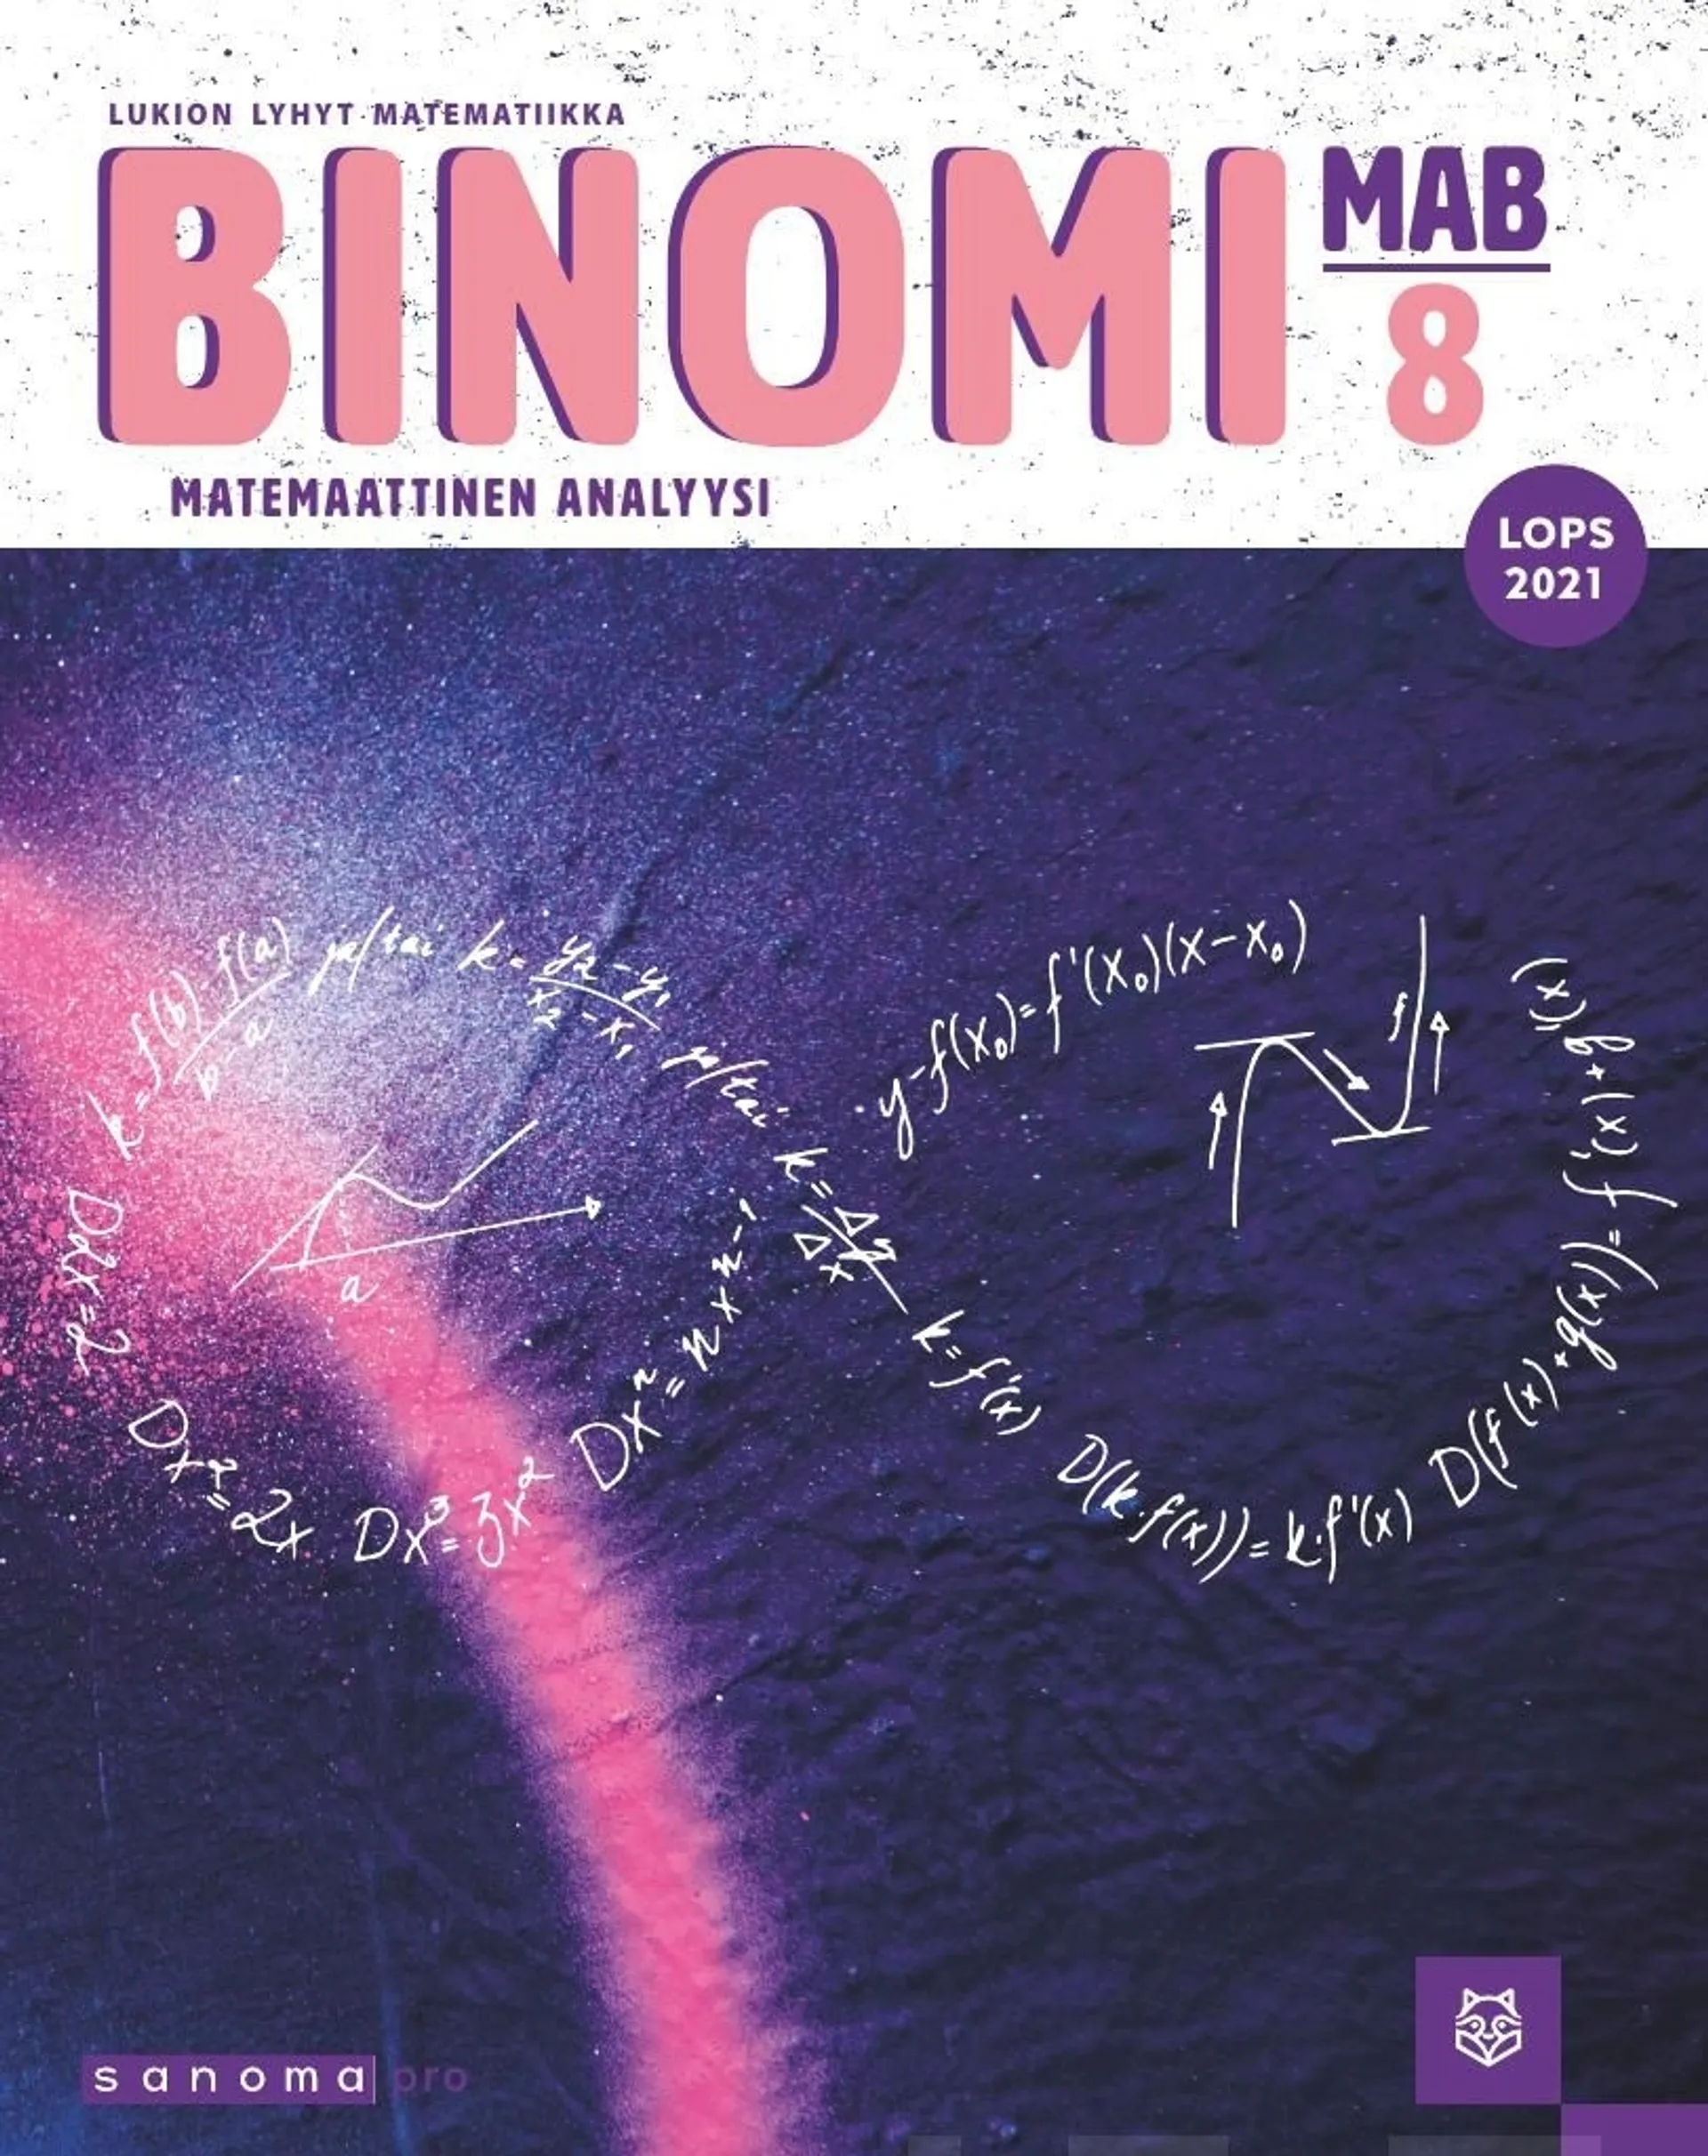 Alatupa, Binomi MAB8 (LOPS21) - Matemaattinen analyysi